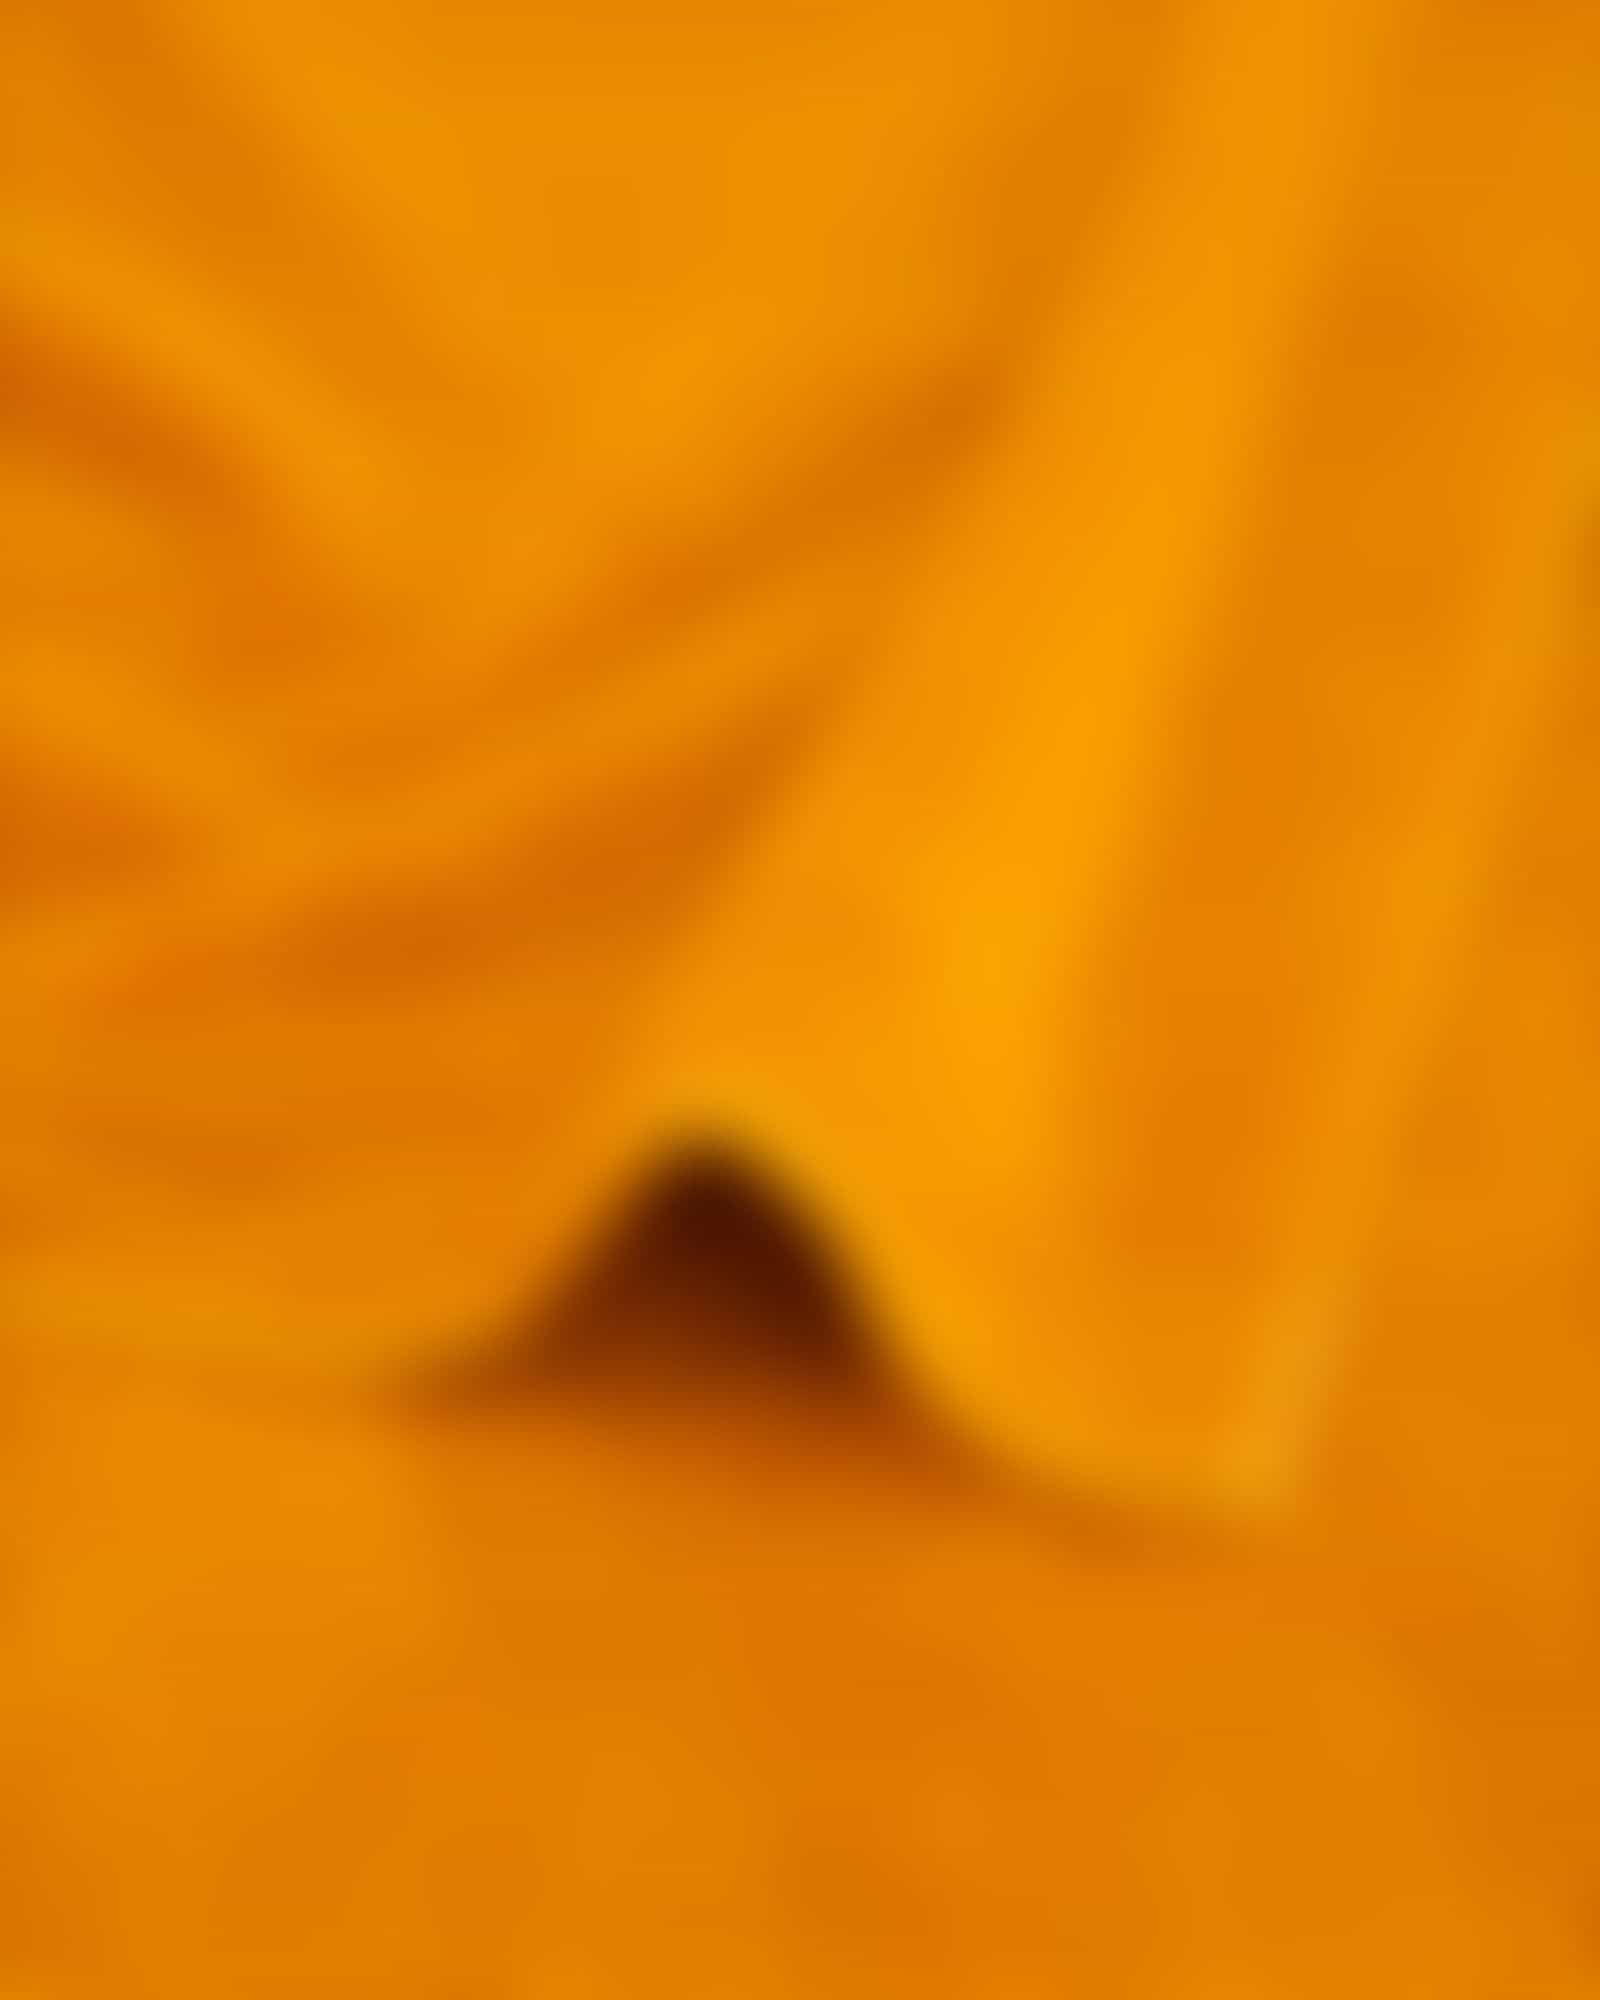 Vossen Handtücher Calypso Feeling - Farbe: fox - 2340 - Handtuch 50x100 cm